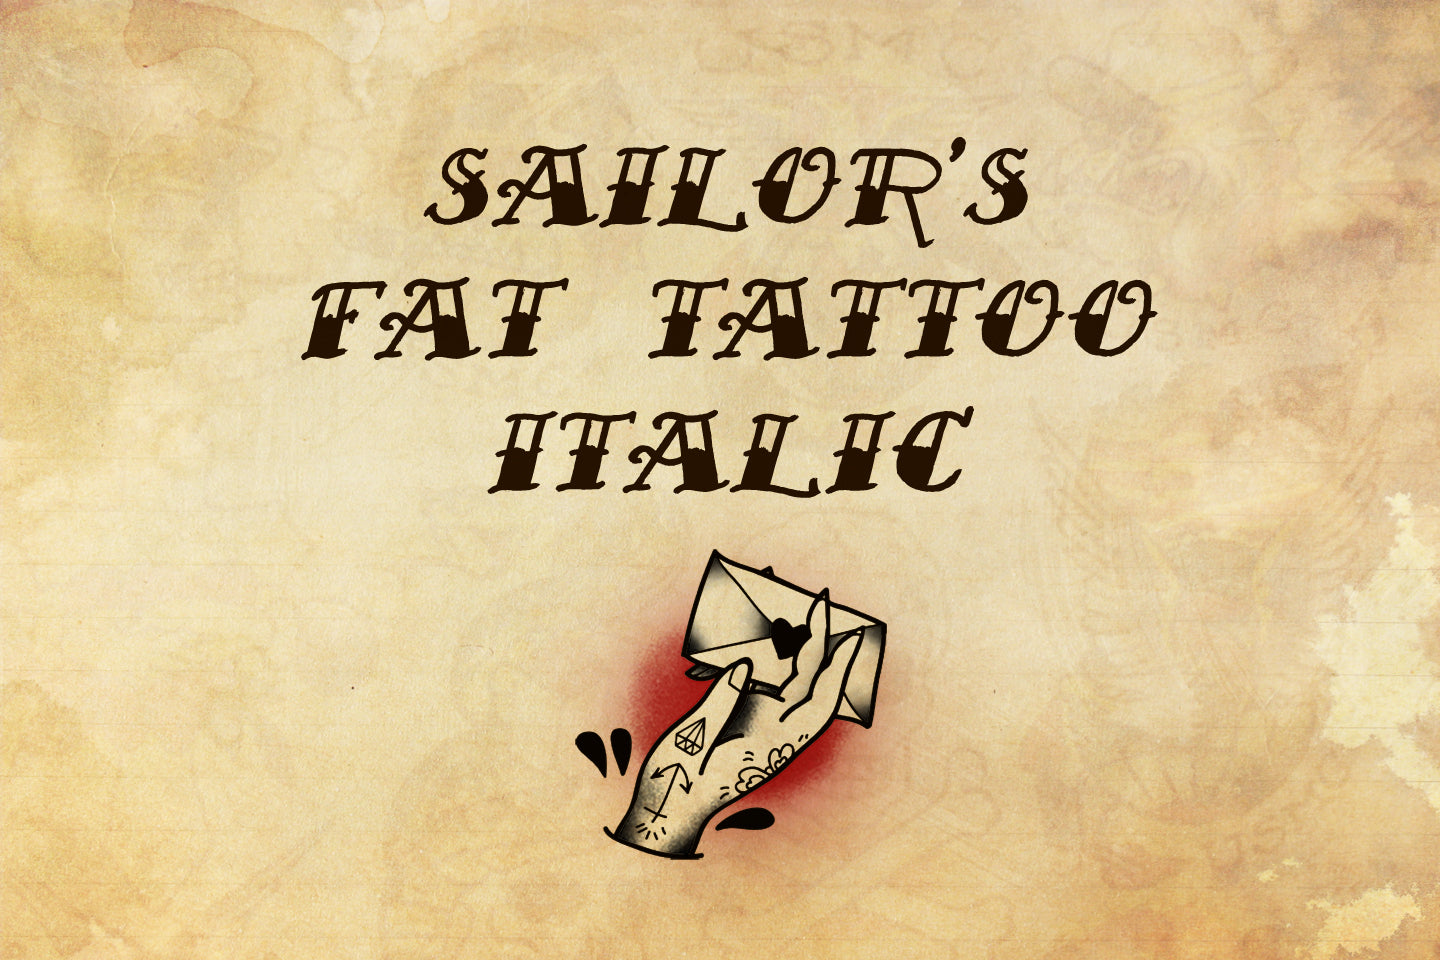 Sailor's Fat Tattoo Script